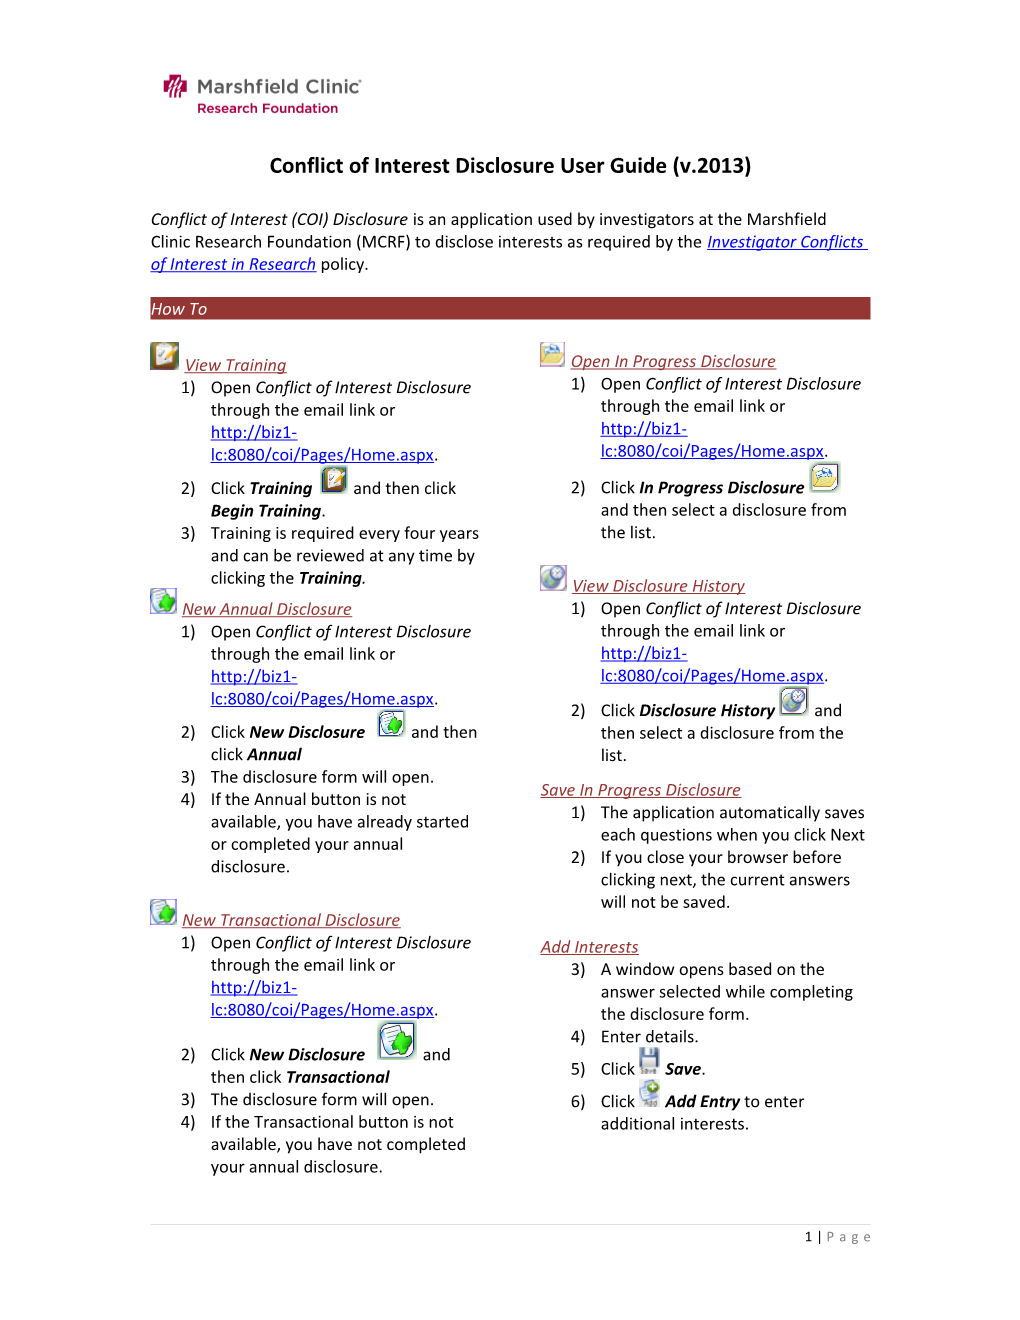 Conflict of Interest Disclosure User Guide (V.2013)